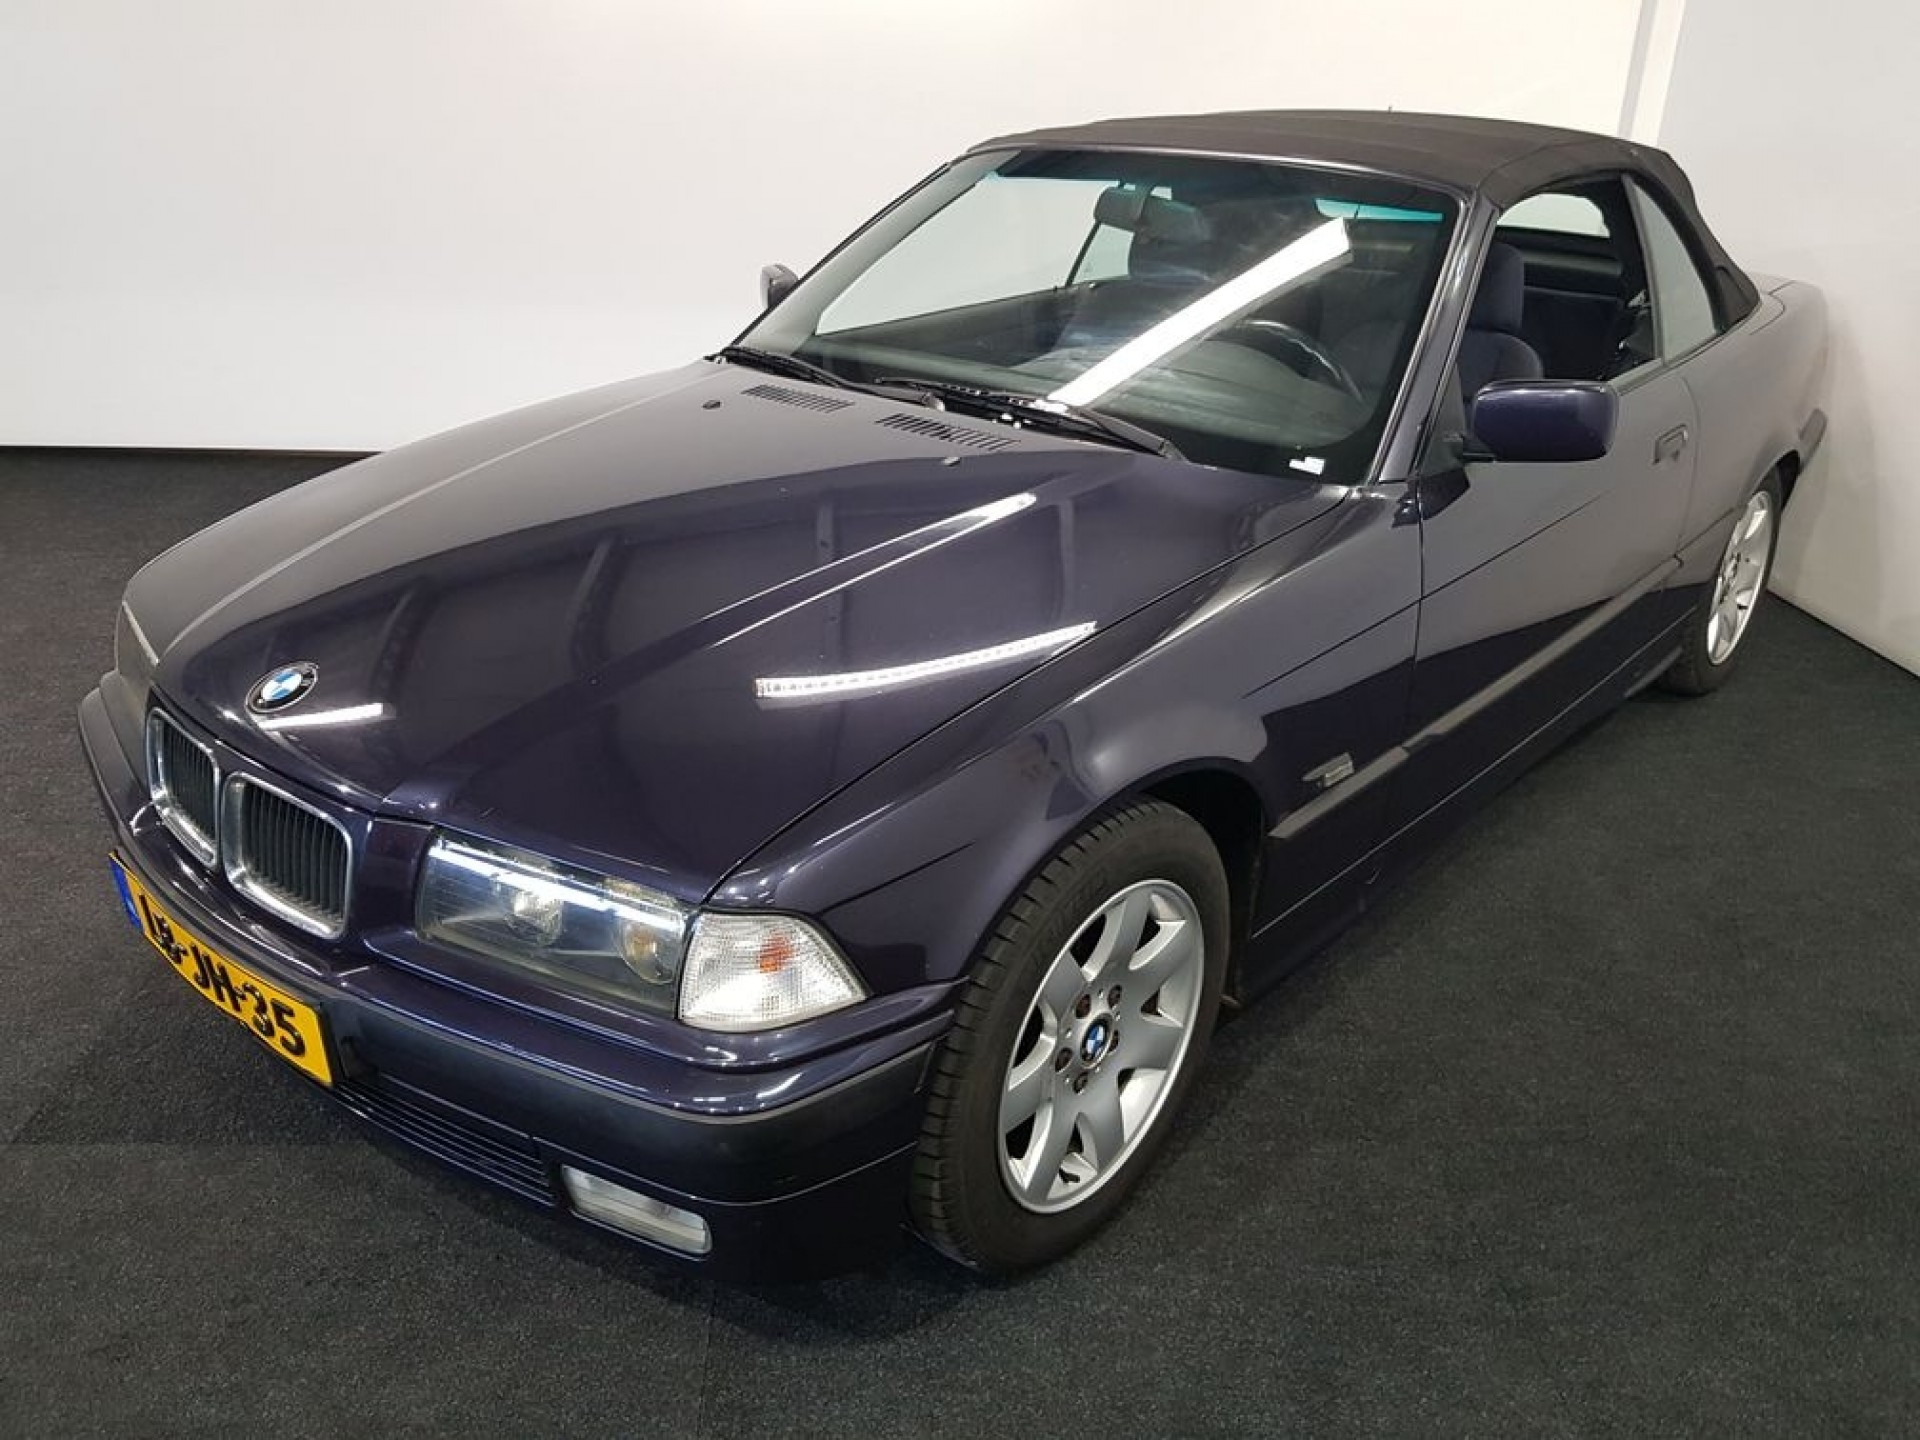 Nieuwsgierigheid Heiligdom daarna BMW 318i E36 Cabriolet 1995 Violett metallic lak te koop bij ERclassics